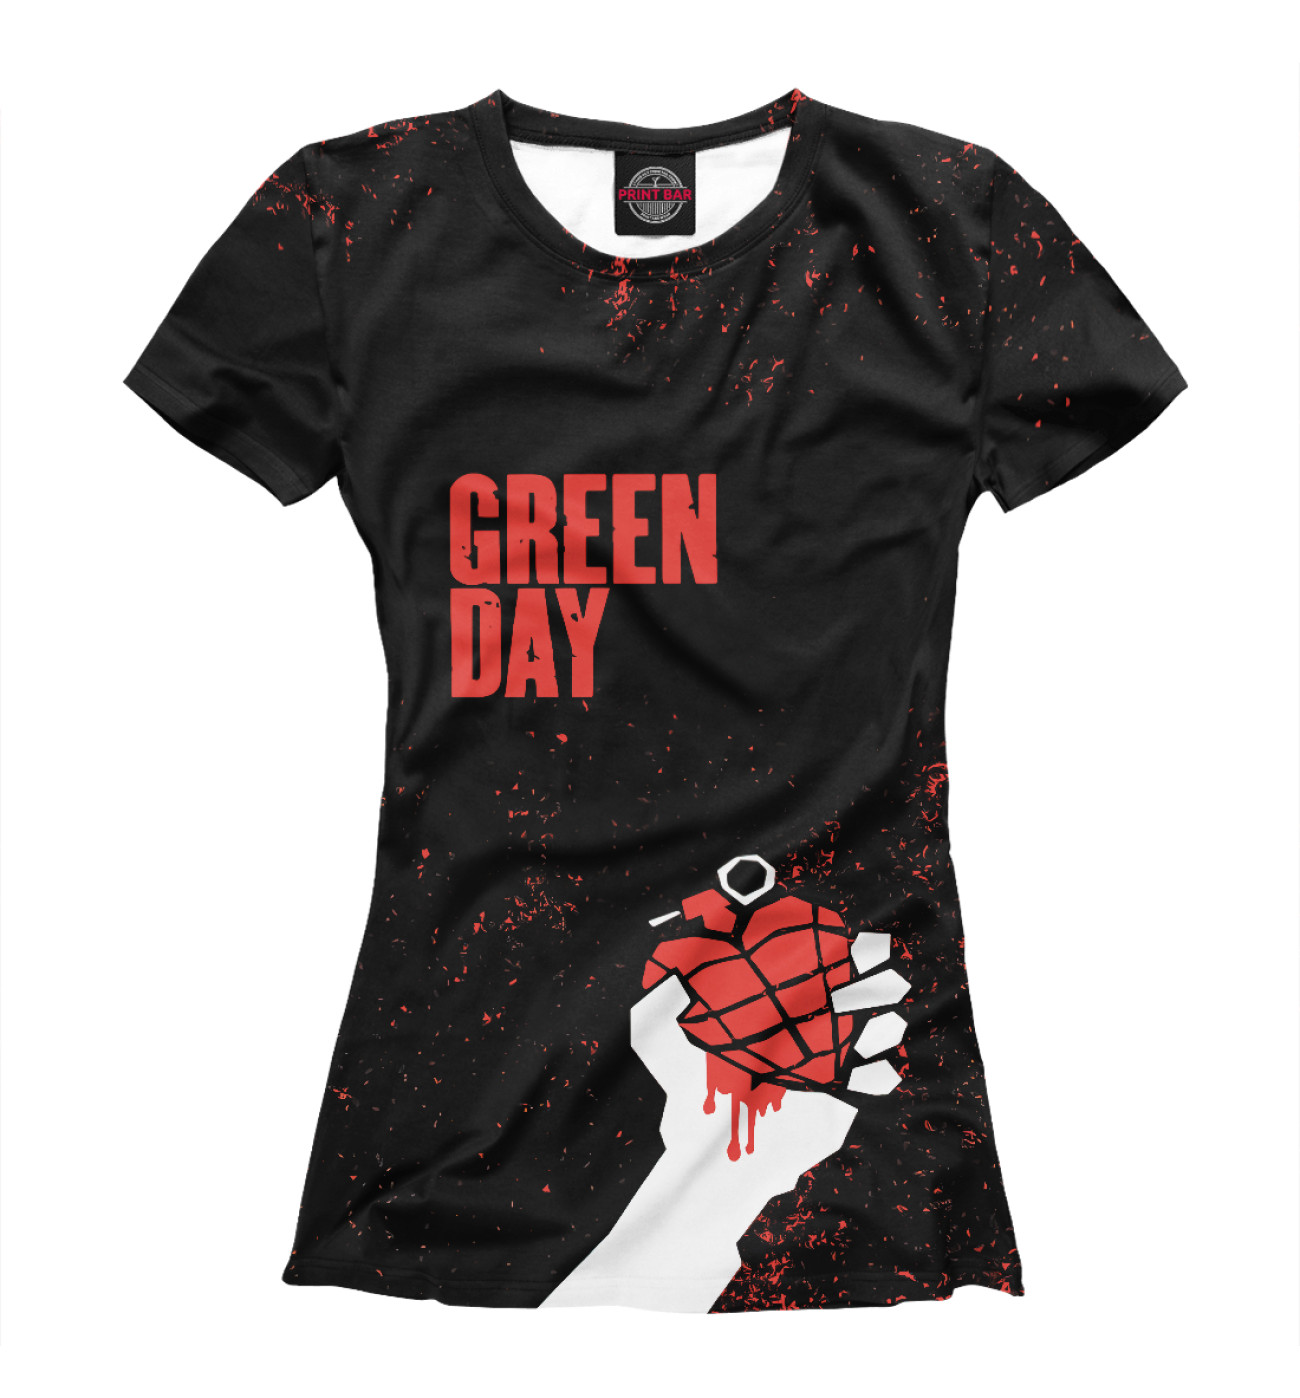 Женская Футболка Green Day, артикул: GRE-108473-fut-1